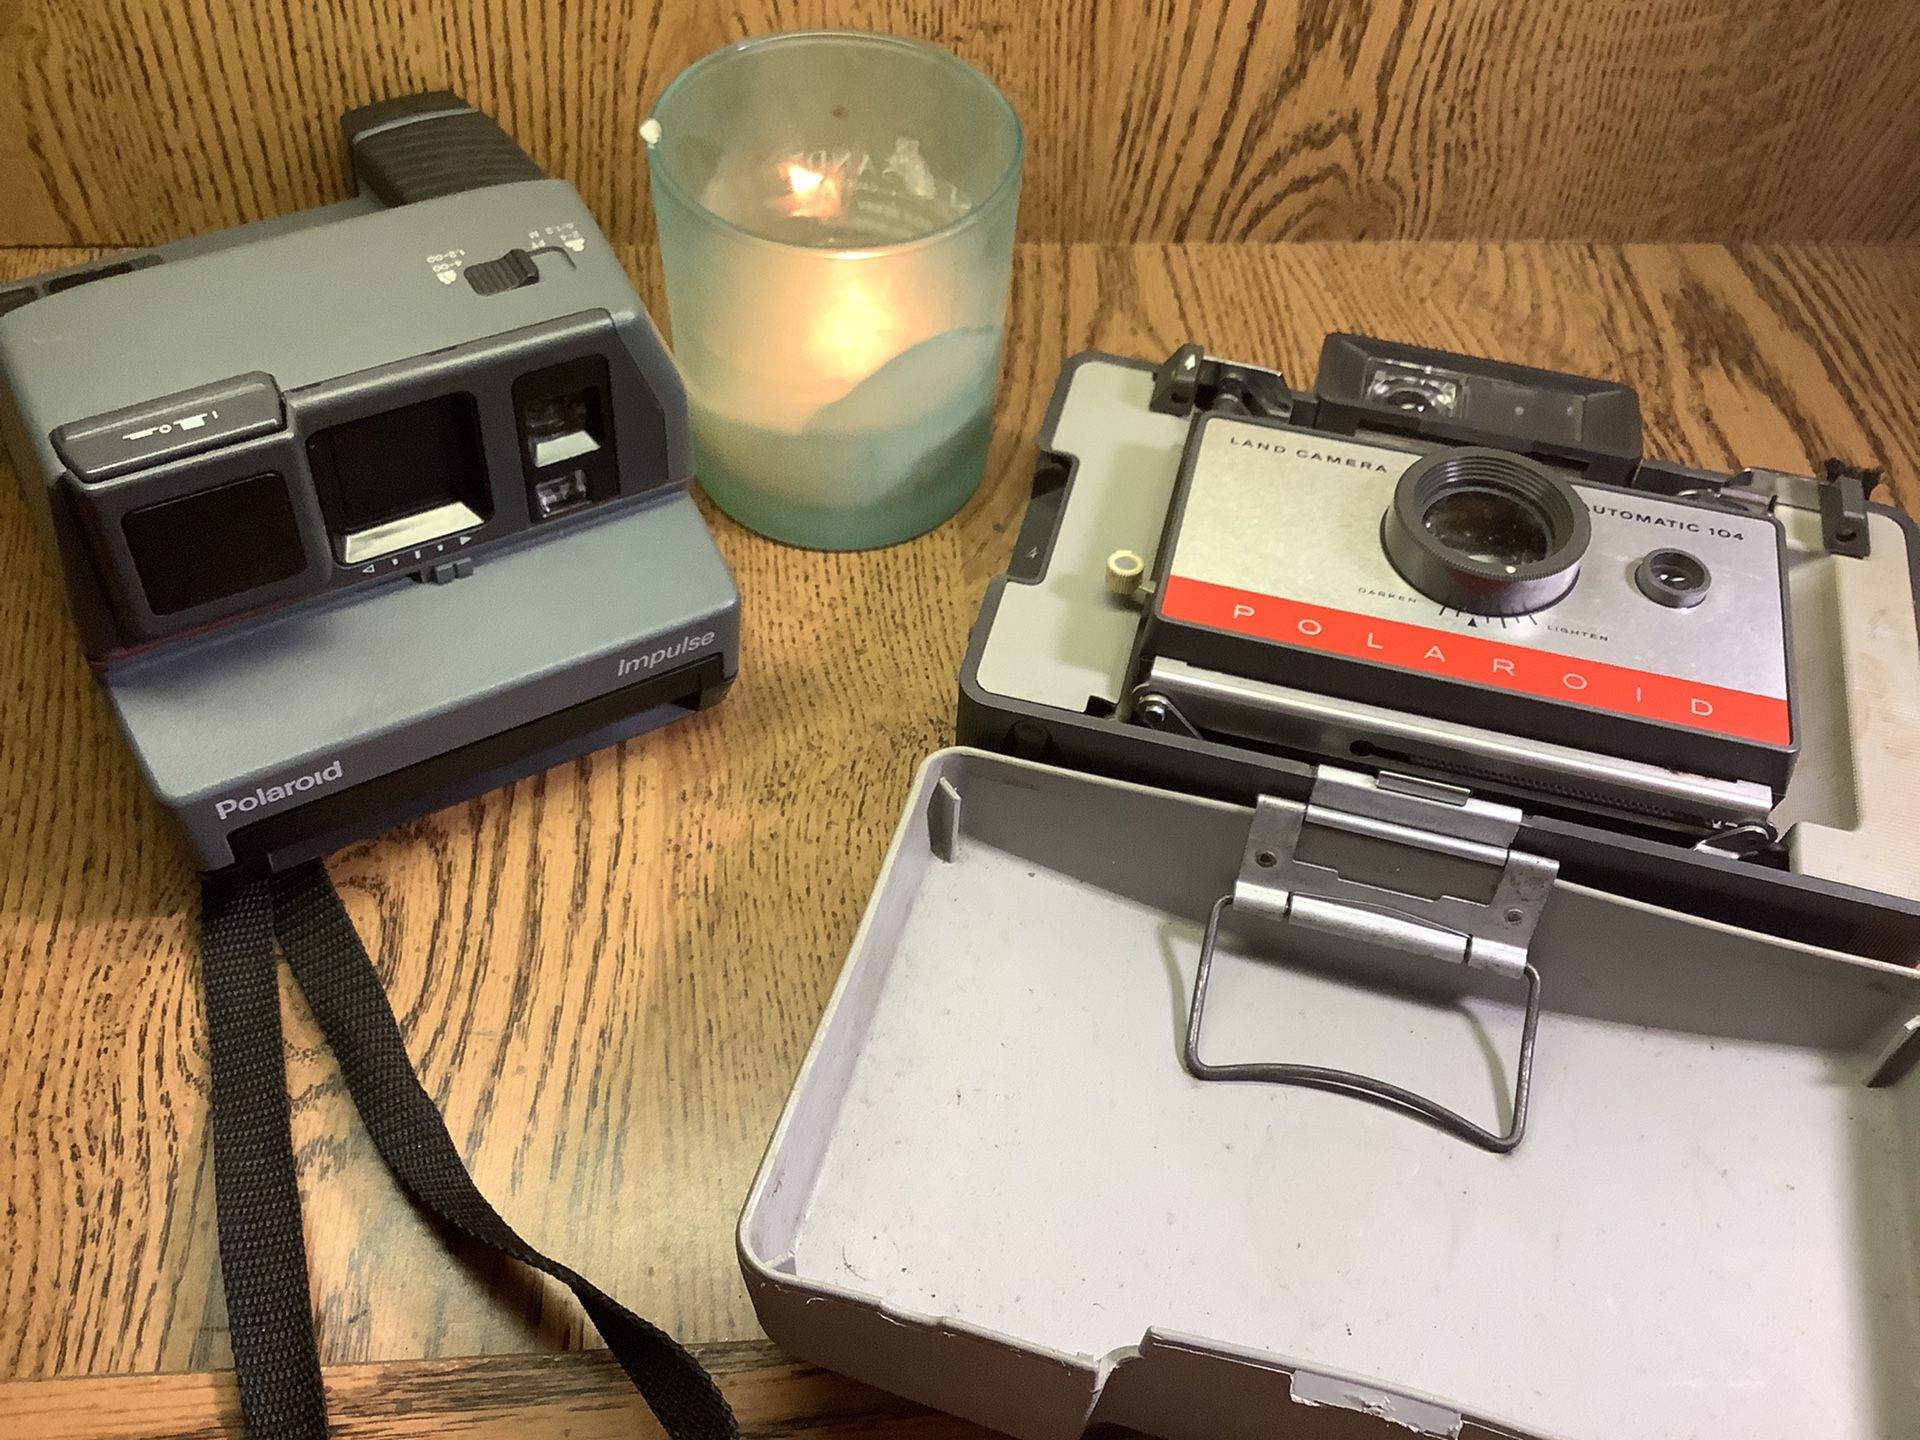 Two vintage Polaroid cameras